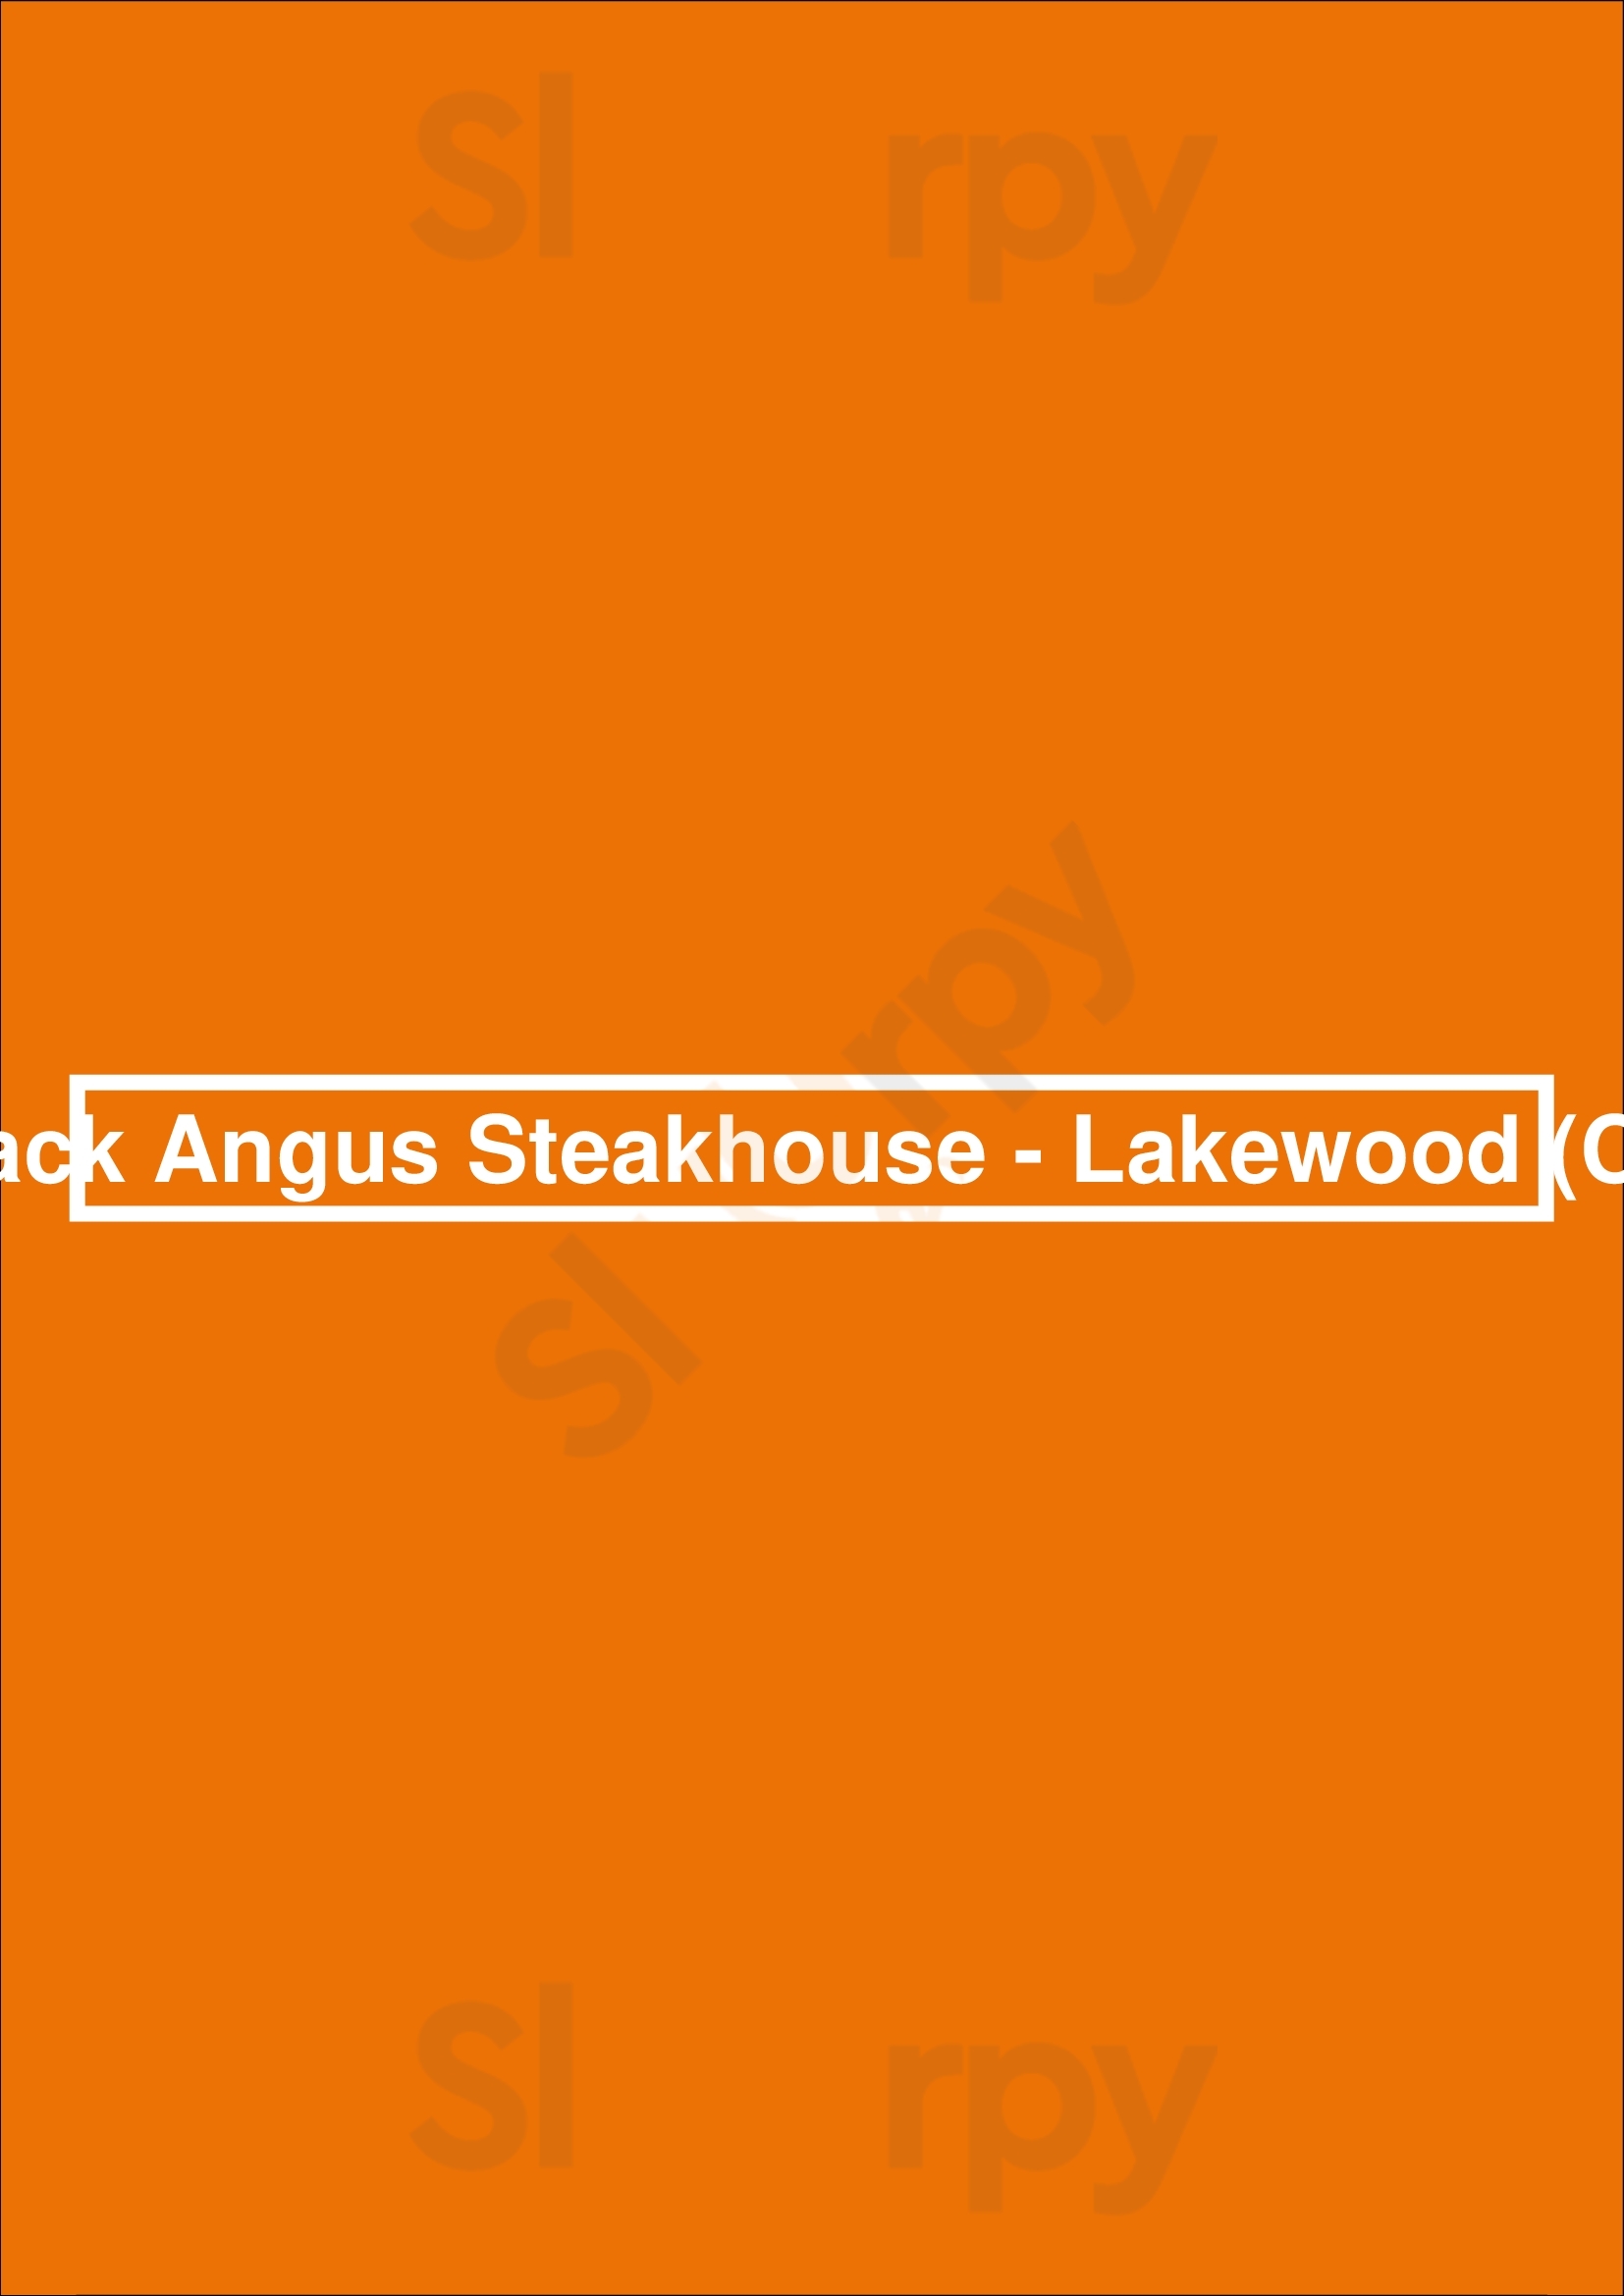 Black Angus Steakhouse - Lakewood (ca) Lakewood Menu - 1